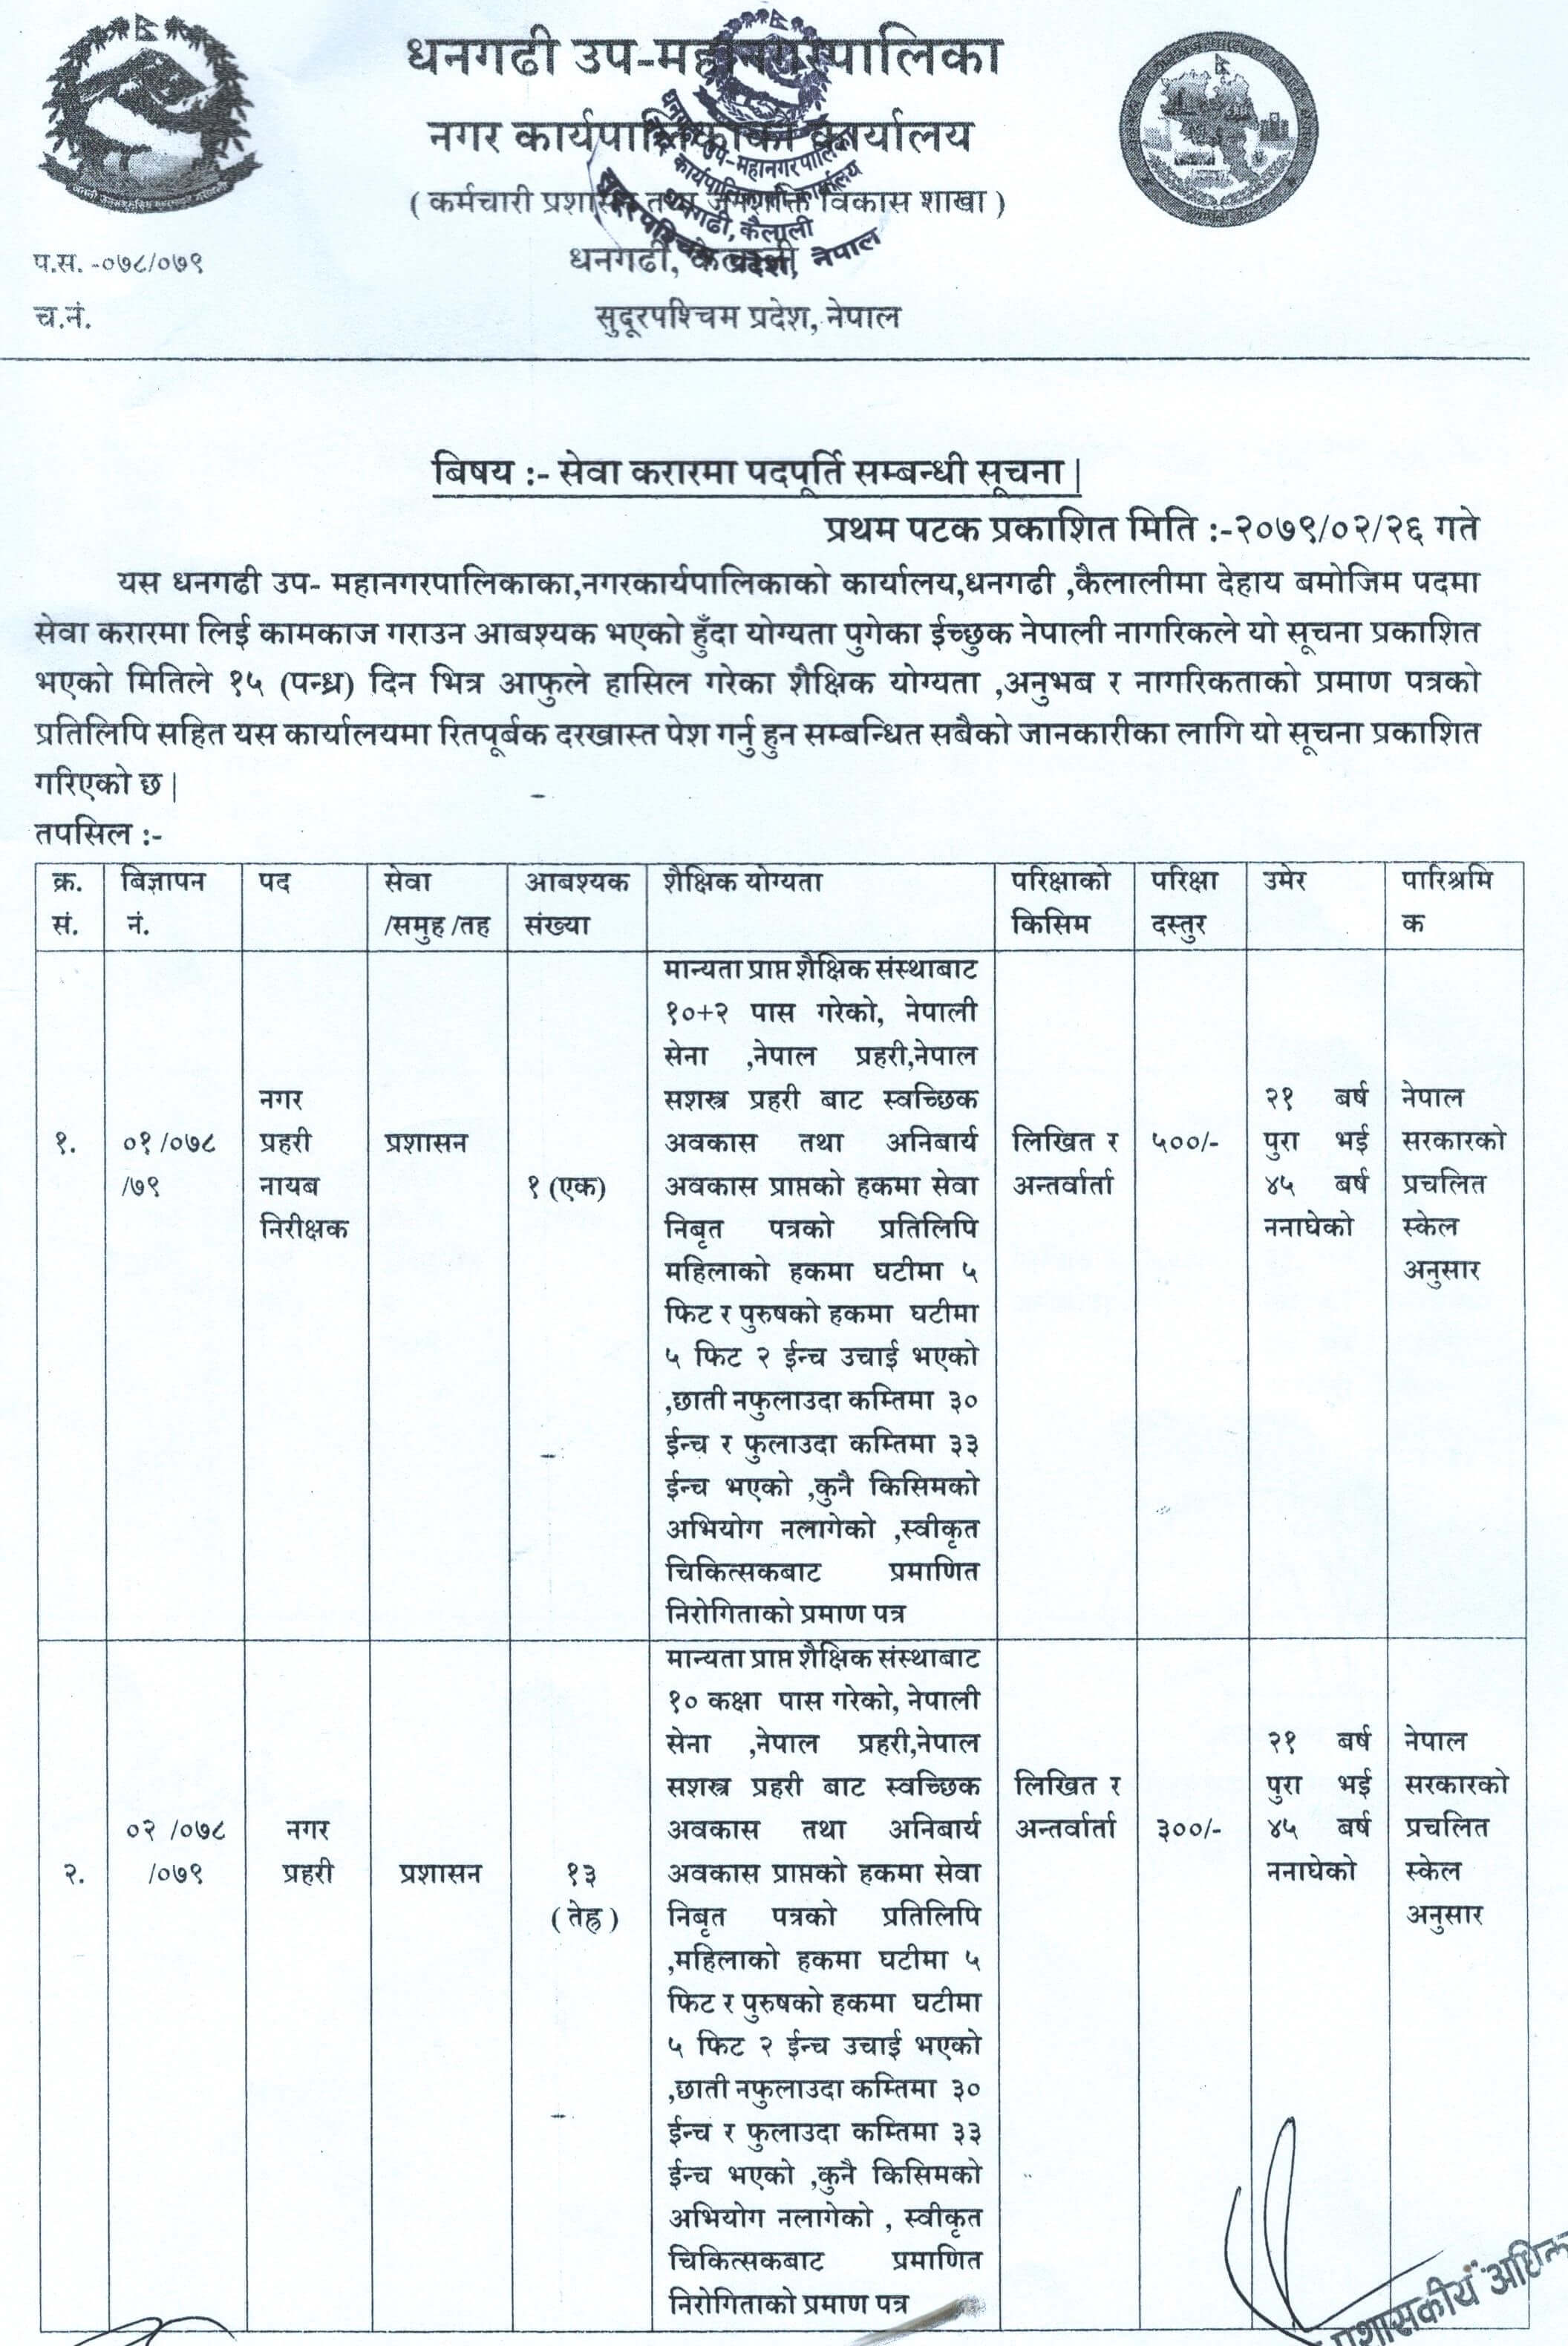 Dhangadhi Sub-Metropolitan City Vacancy Announcement